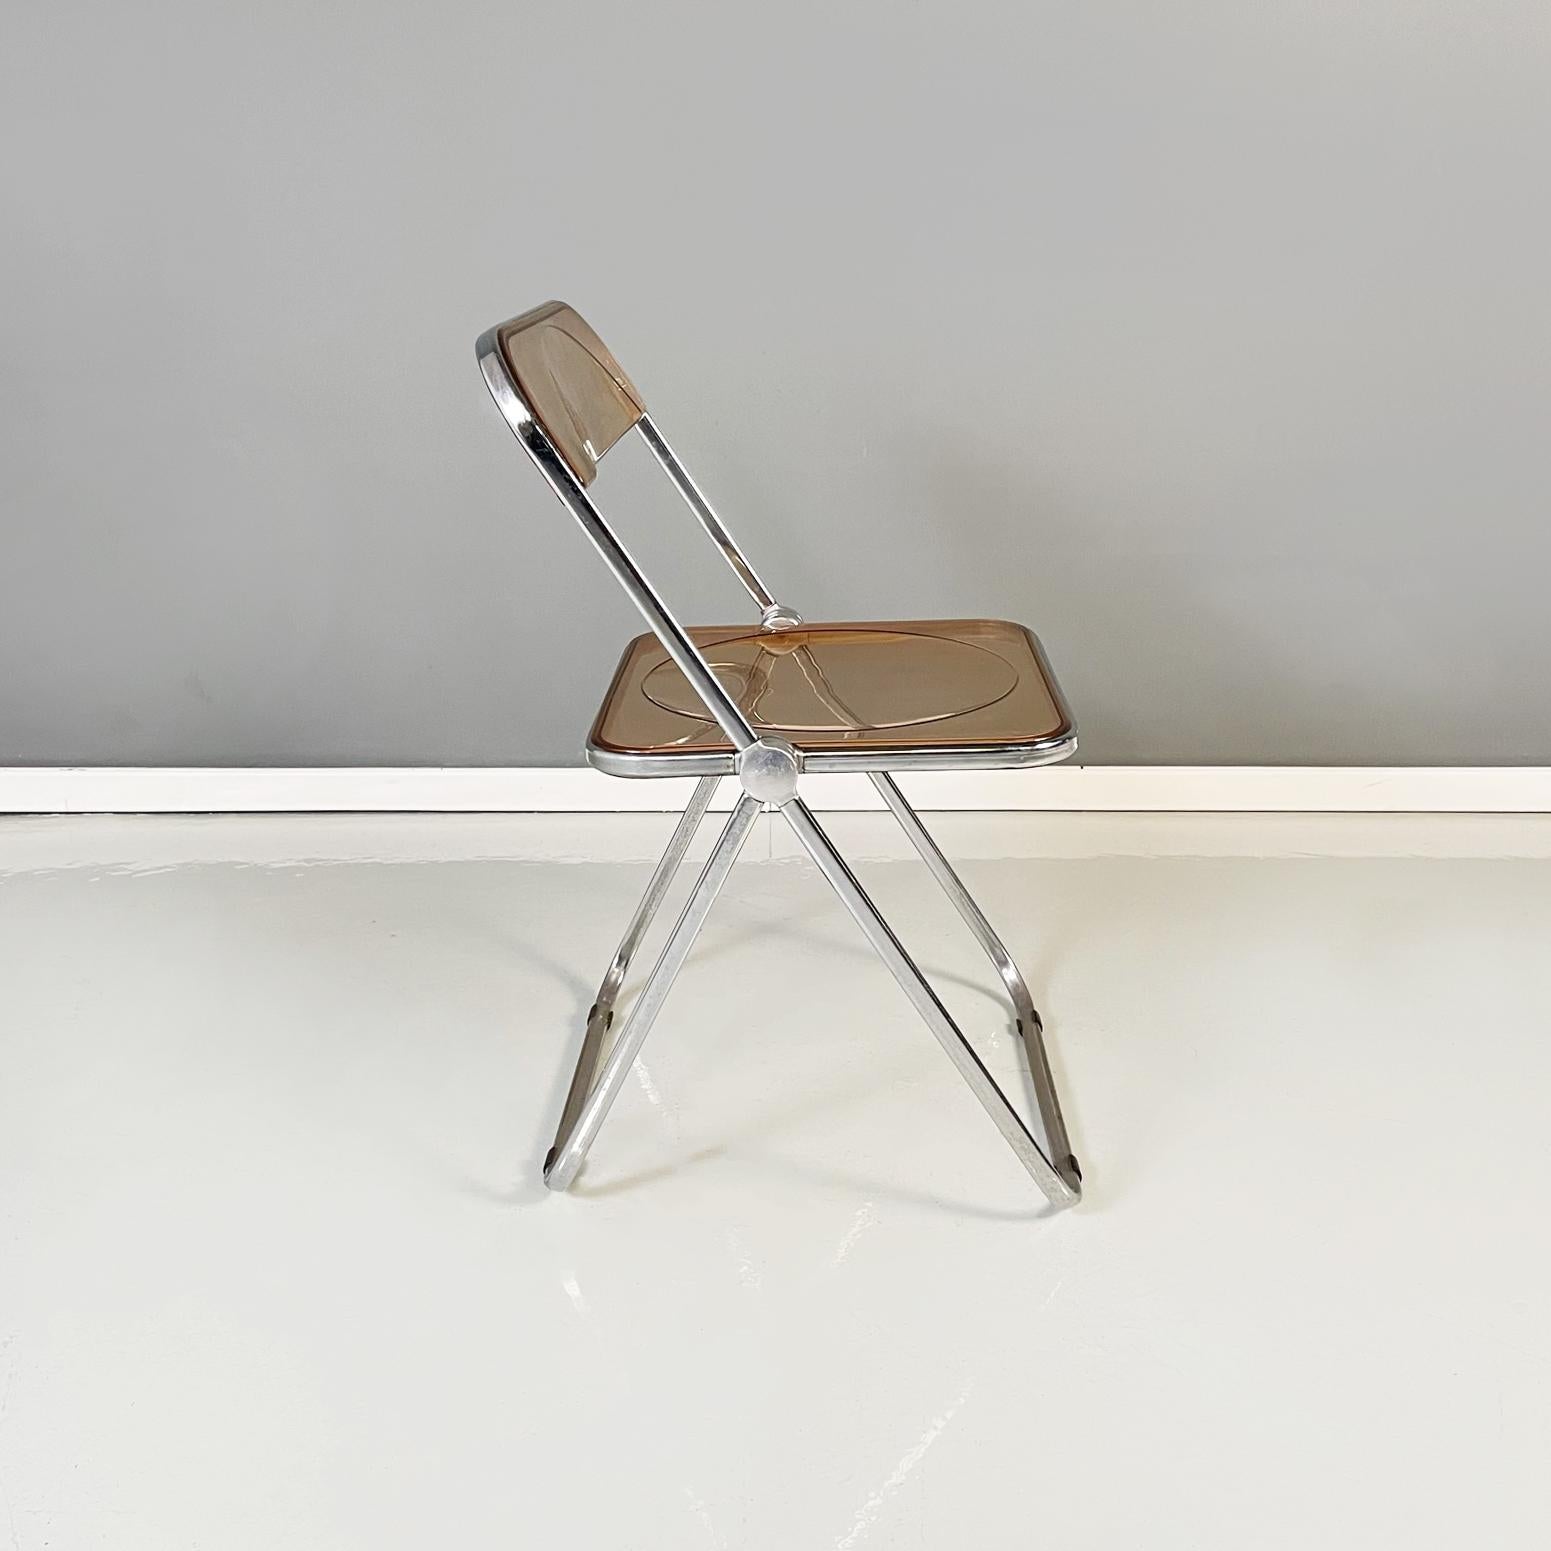 90s flip chair